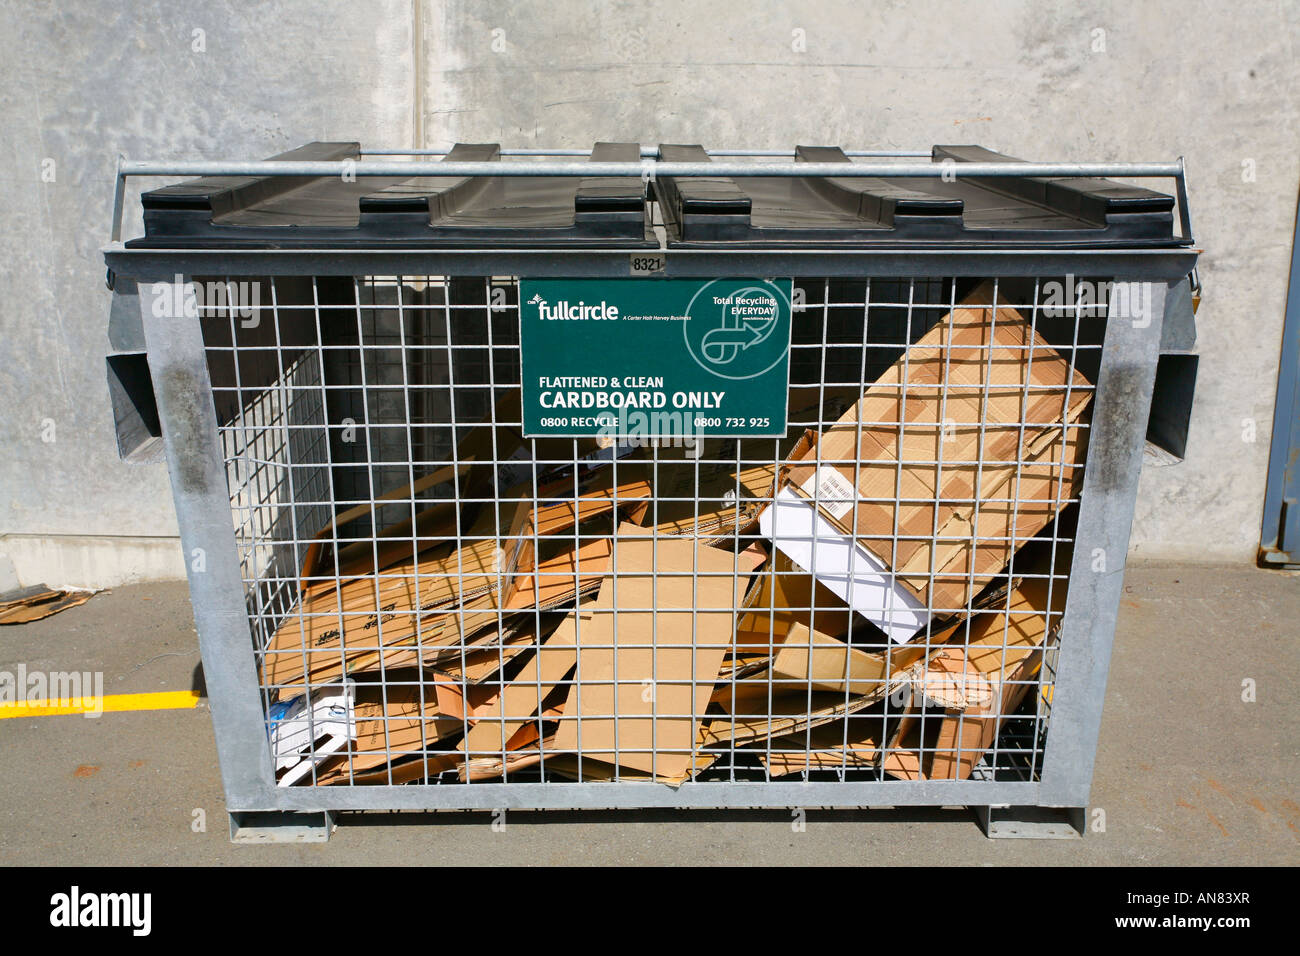 cardboard-recycling-bin-stock-photo-alamy